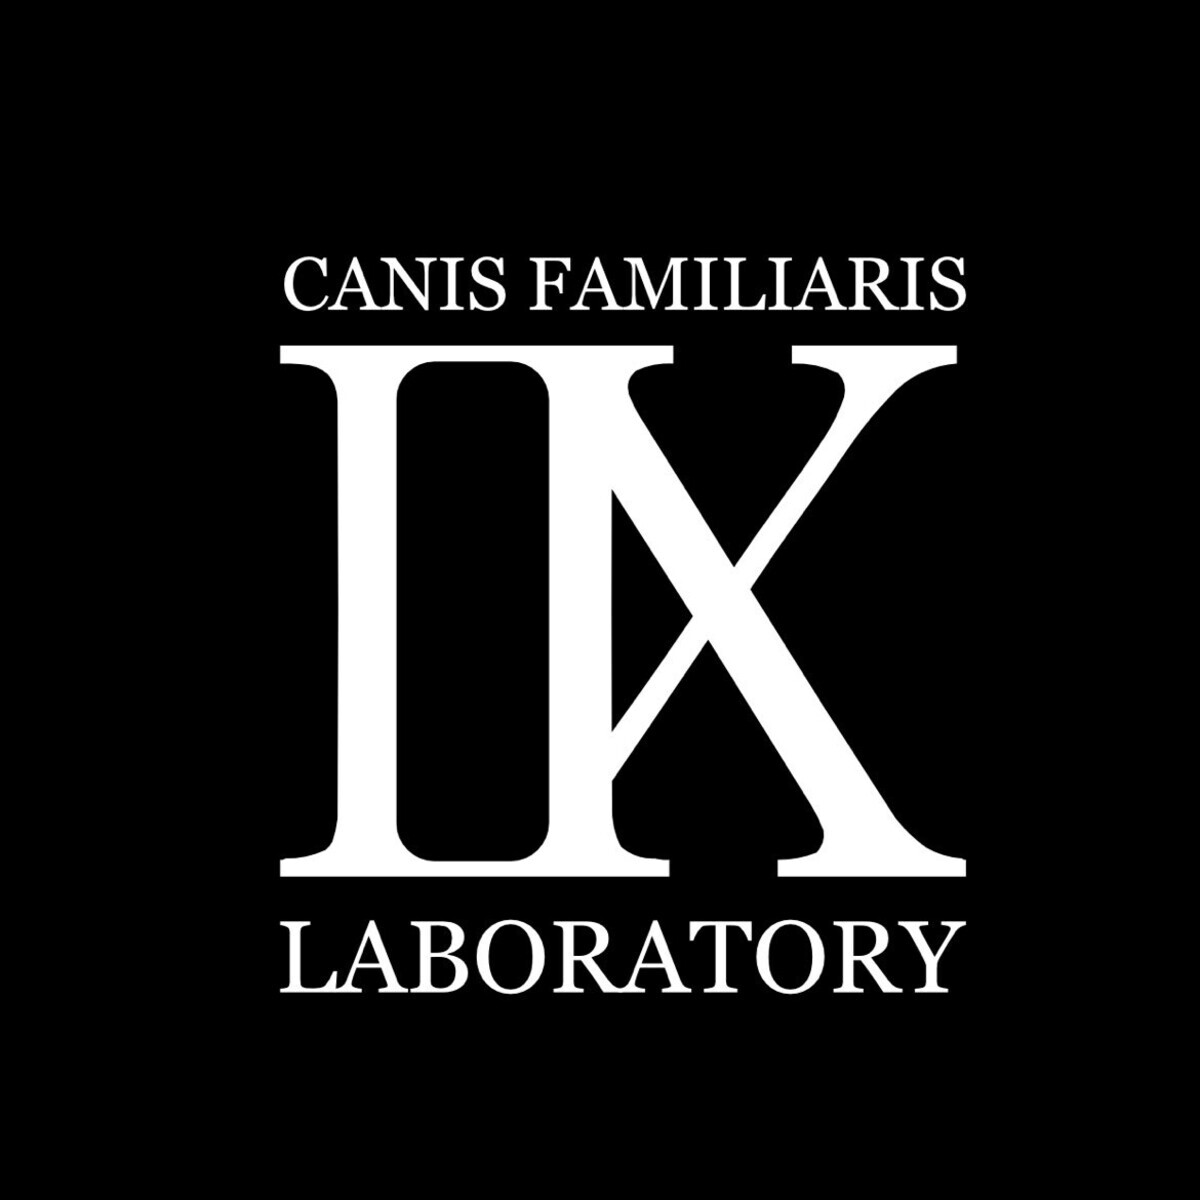 Canis Familiaris Laboratory